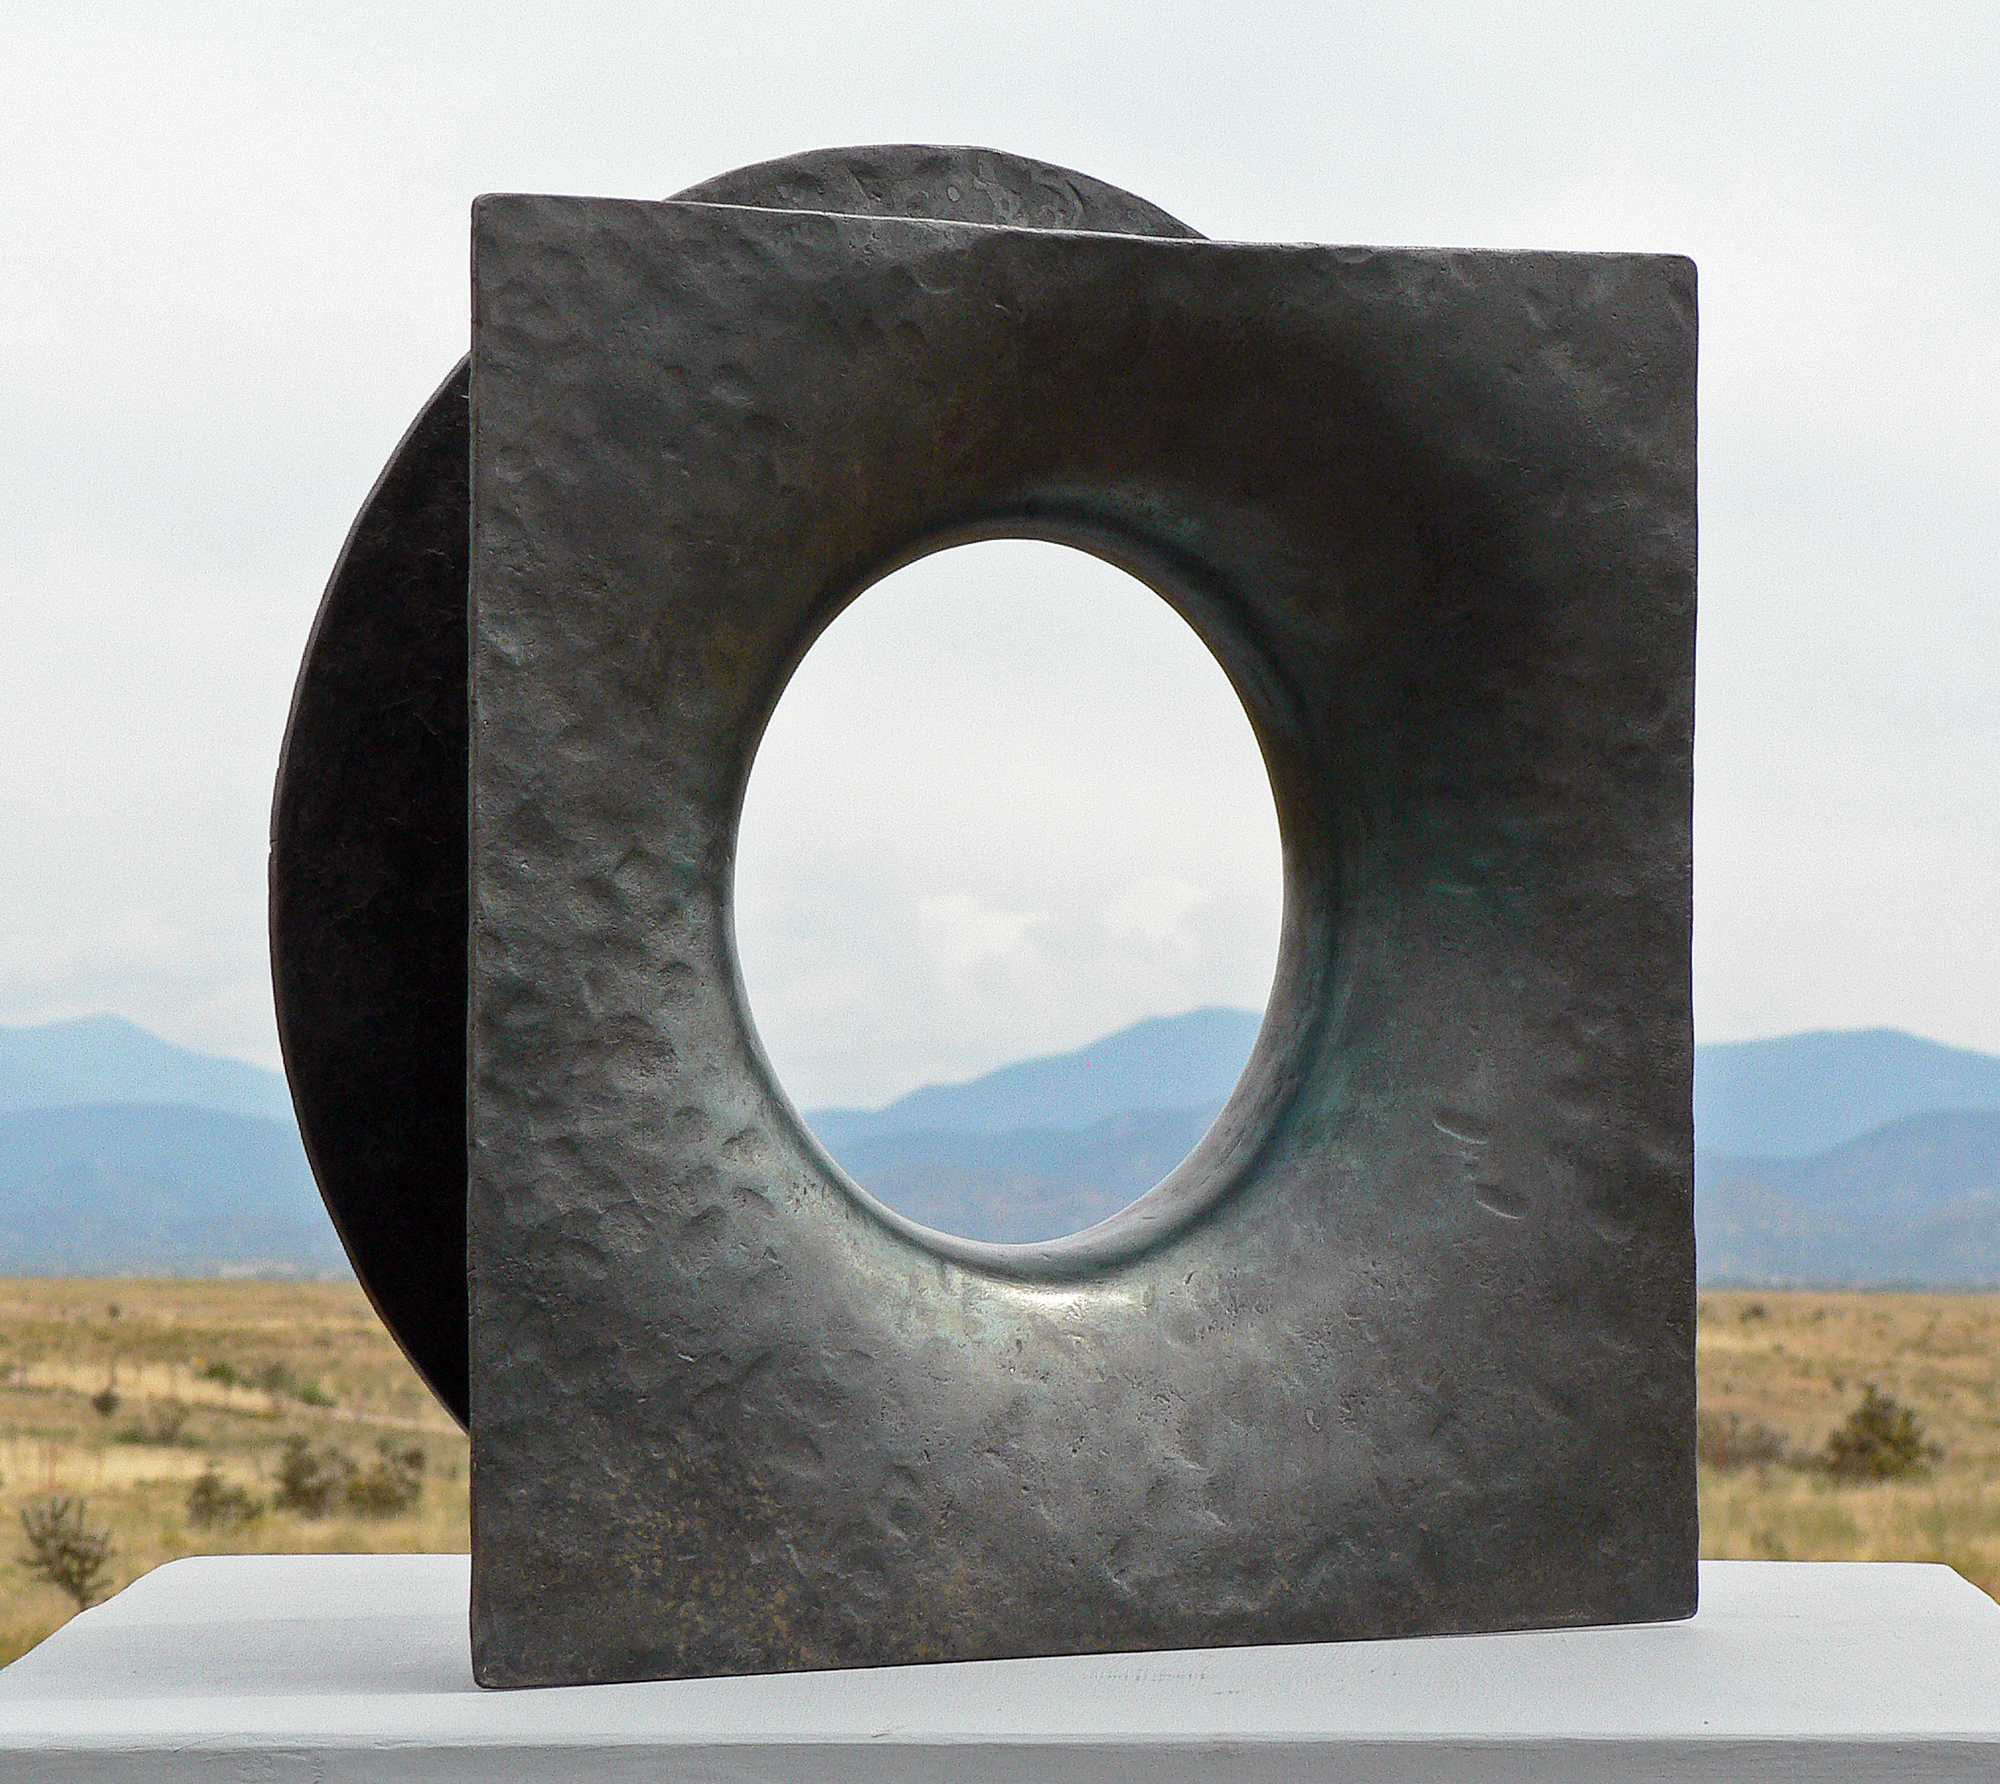 'Forged Ring #1' David Larson / 1999 / steel / 15" x 15" x 4"